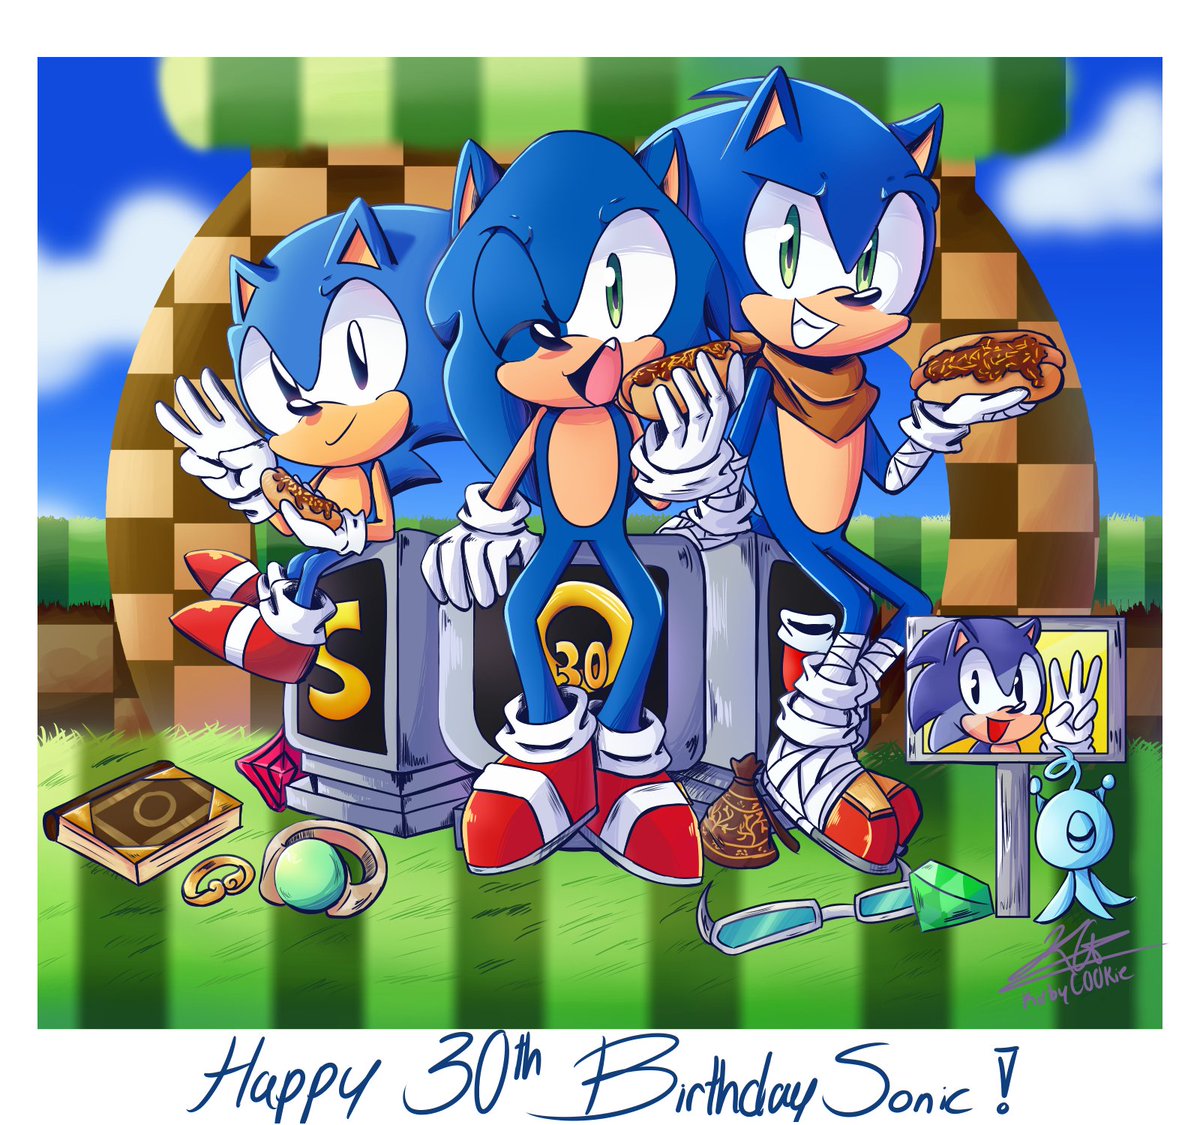 Happy late 30TH birthday sonic! 